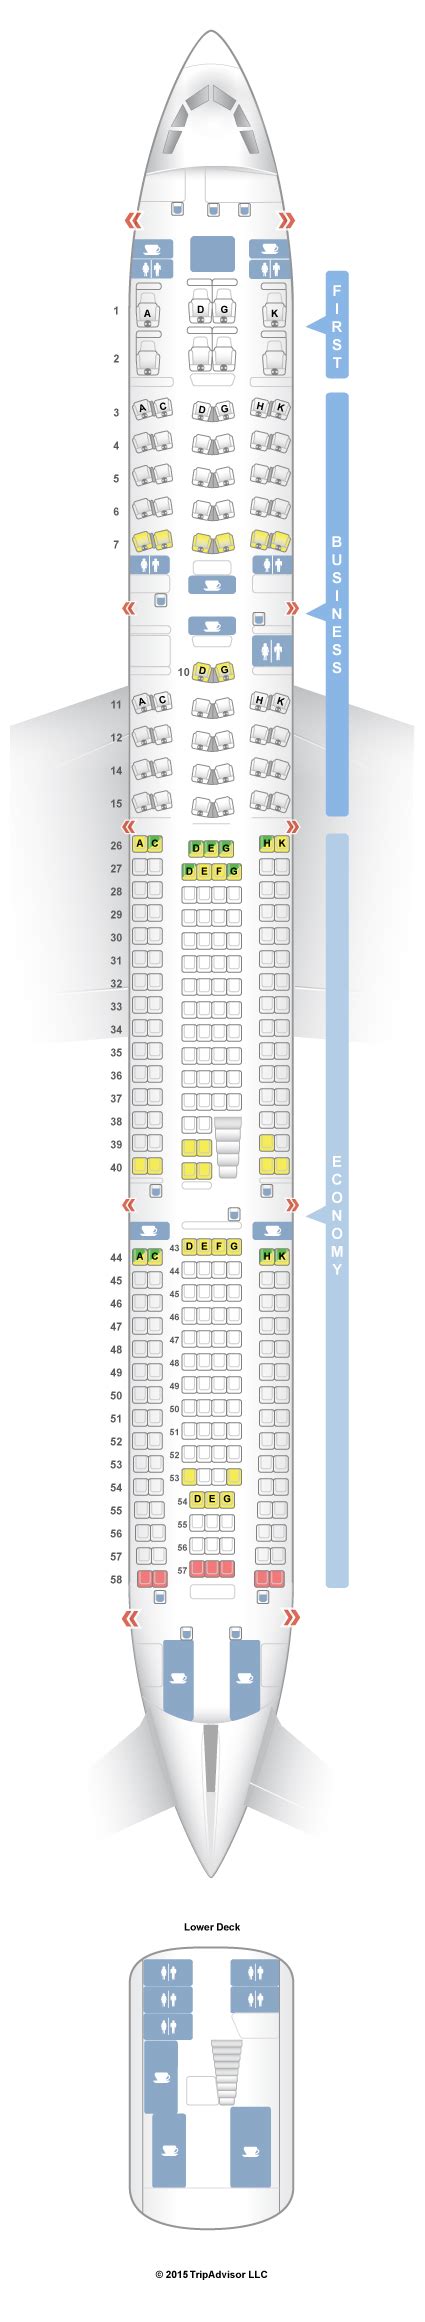 Seatguru Seat Map Lufthansa Airbus A340 600 346 V2 Airplane Seats